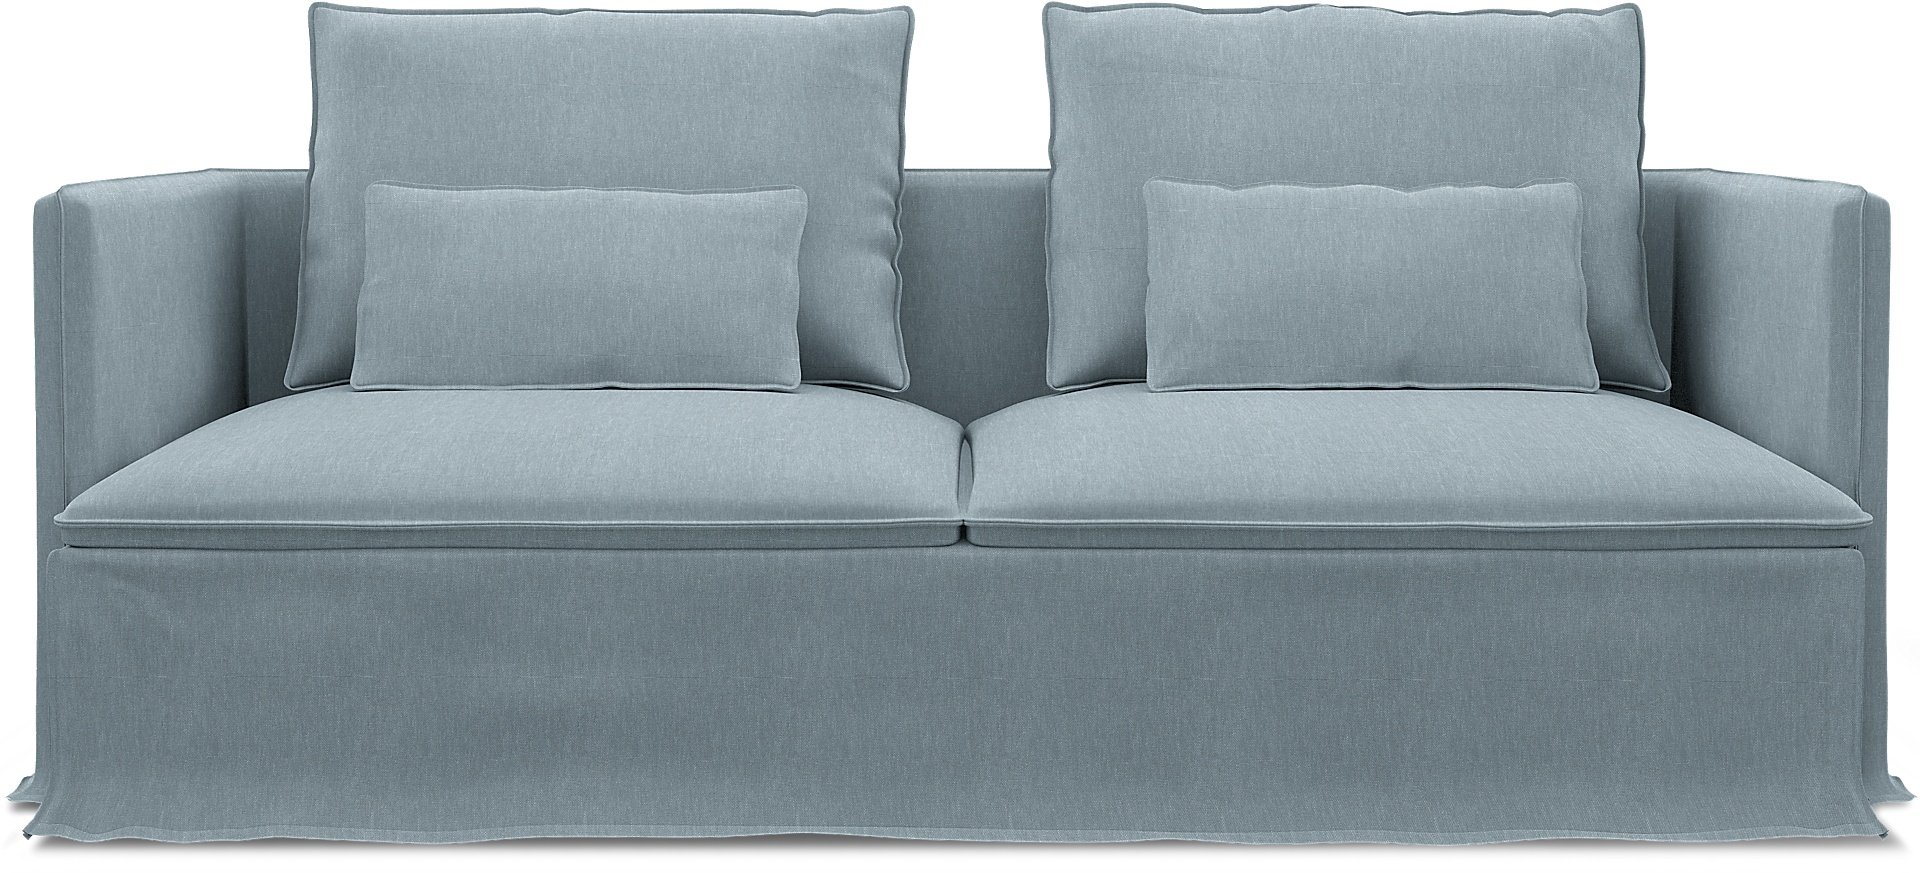 IKEA - Soderhamn 3 Seater Sofa Cover, Dusty Blue, Linen - Bemz